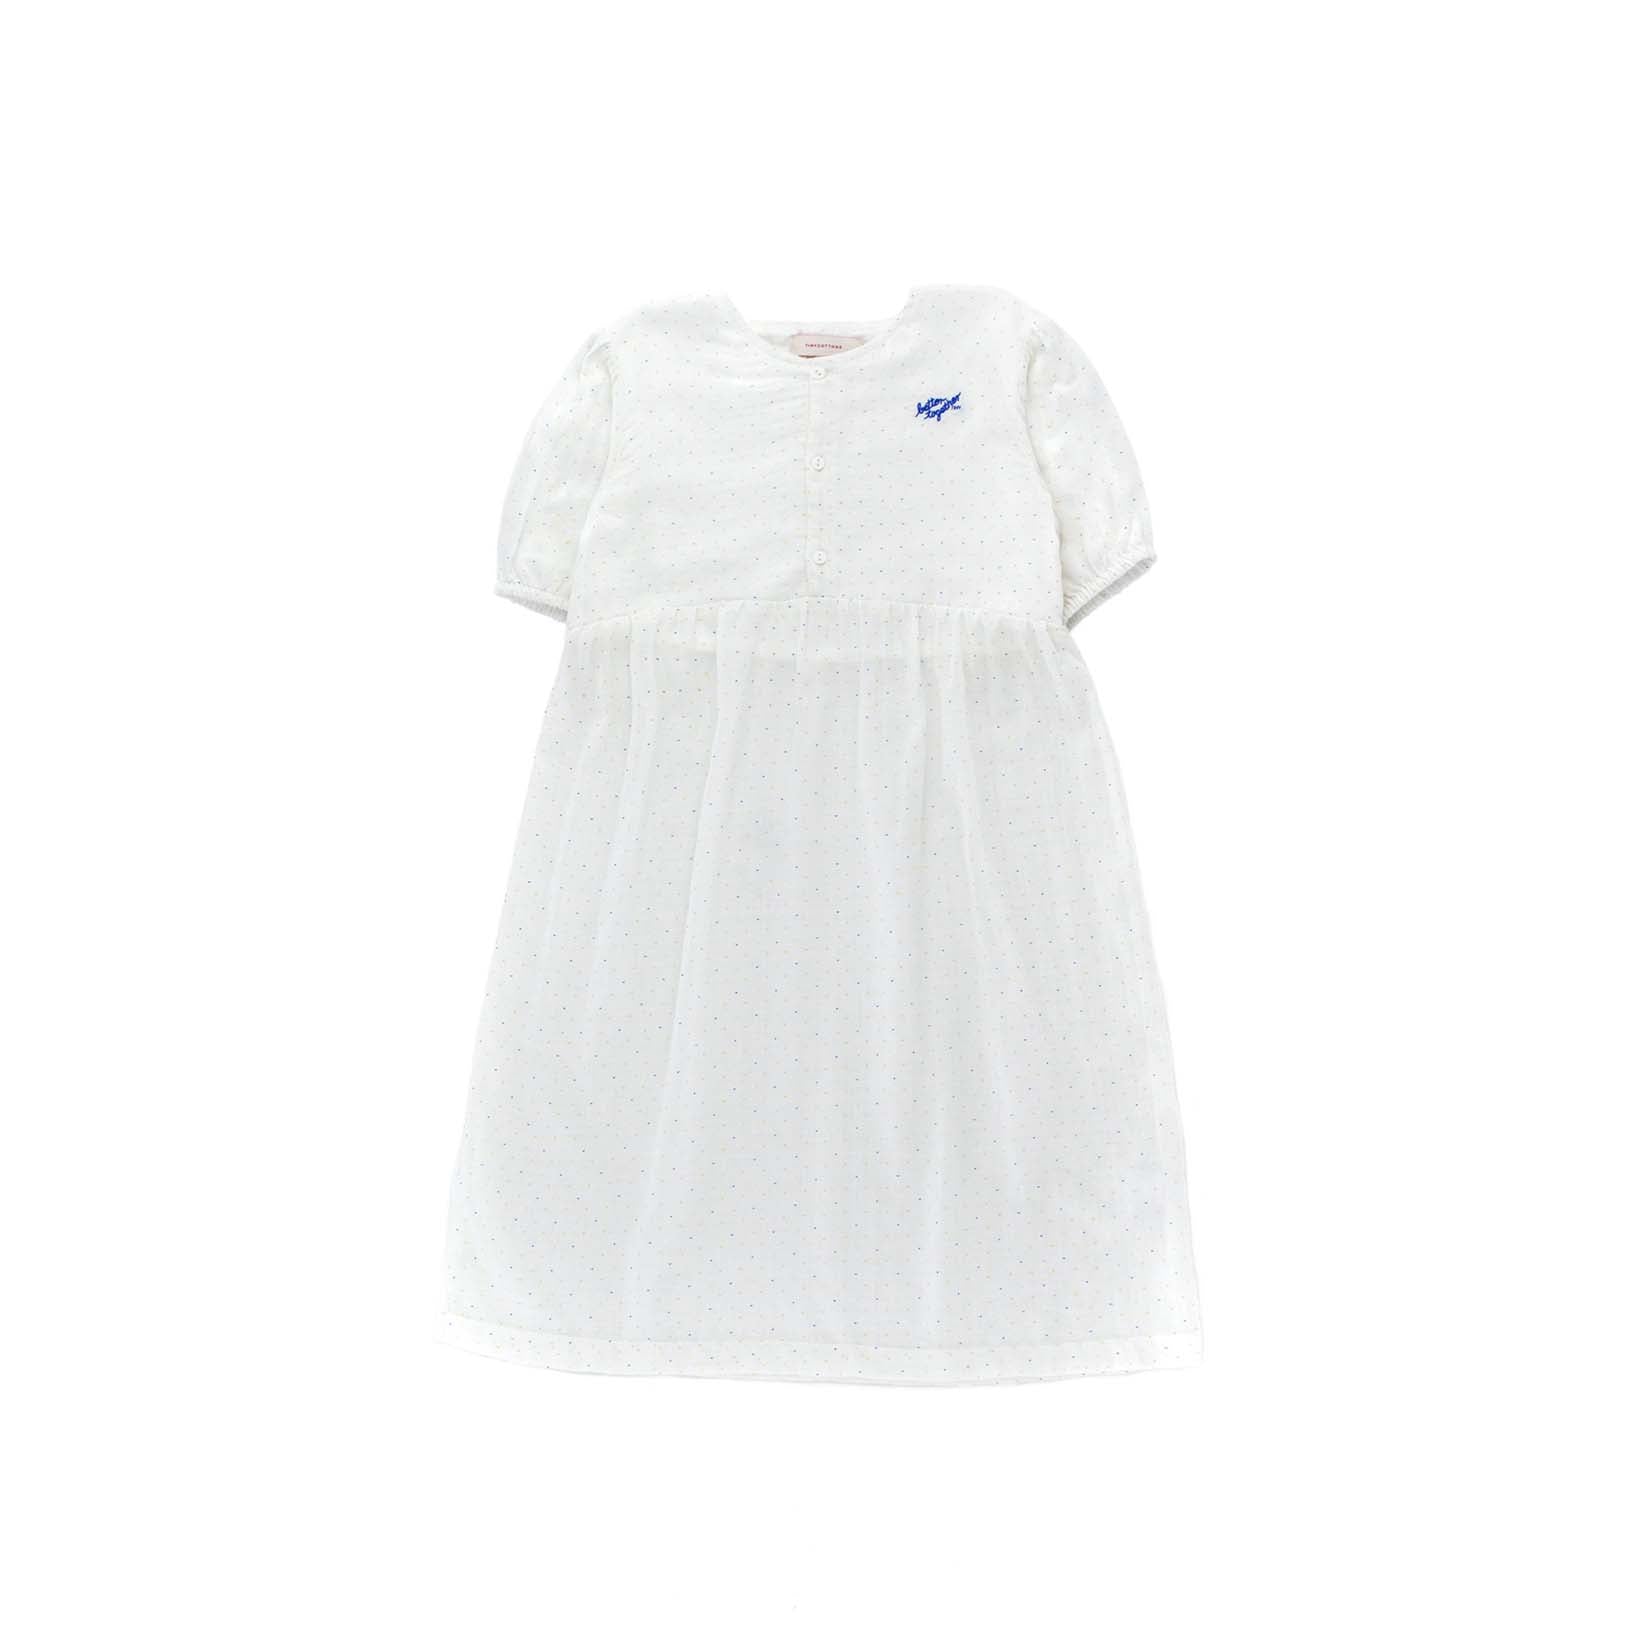 Girls White Dots Cotton Dress